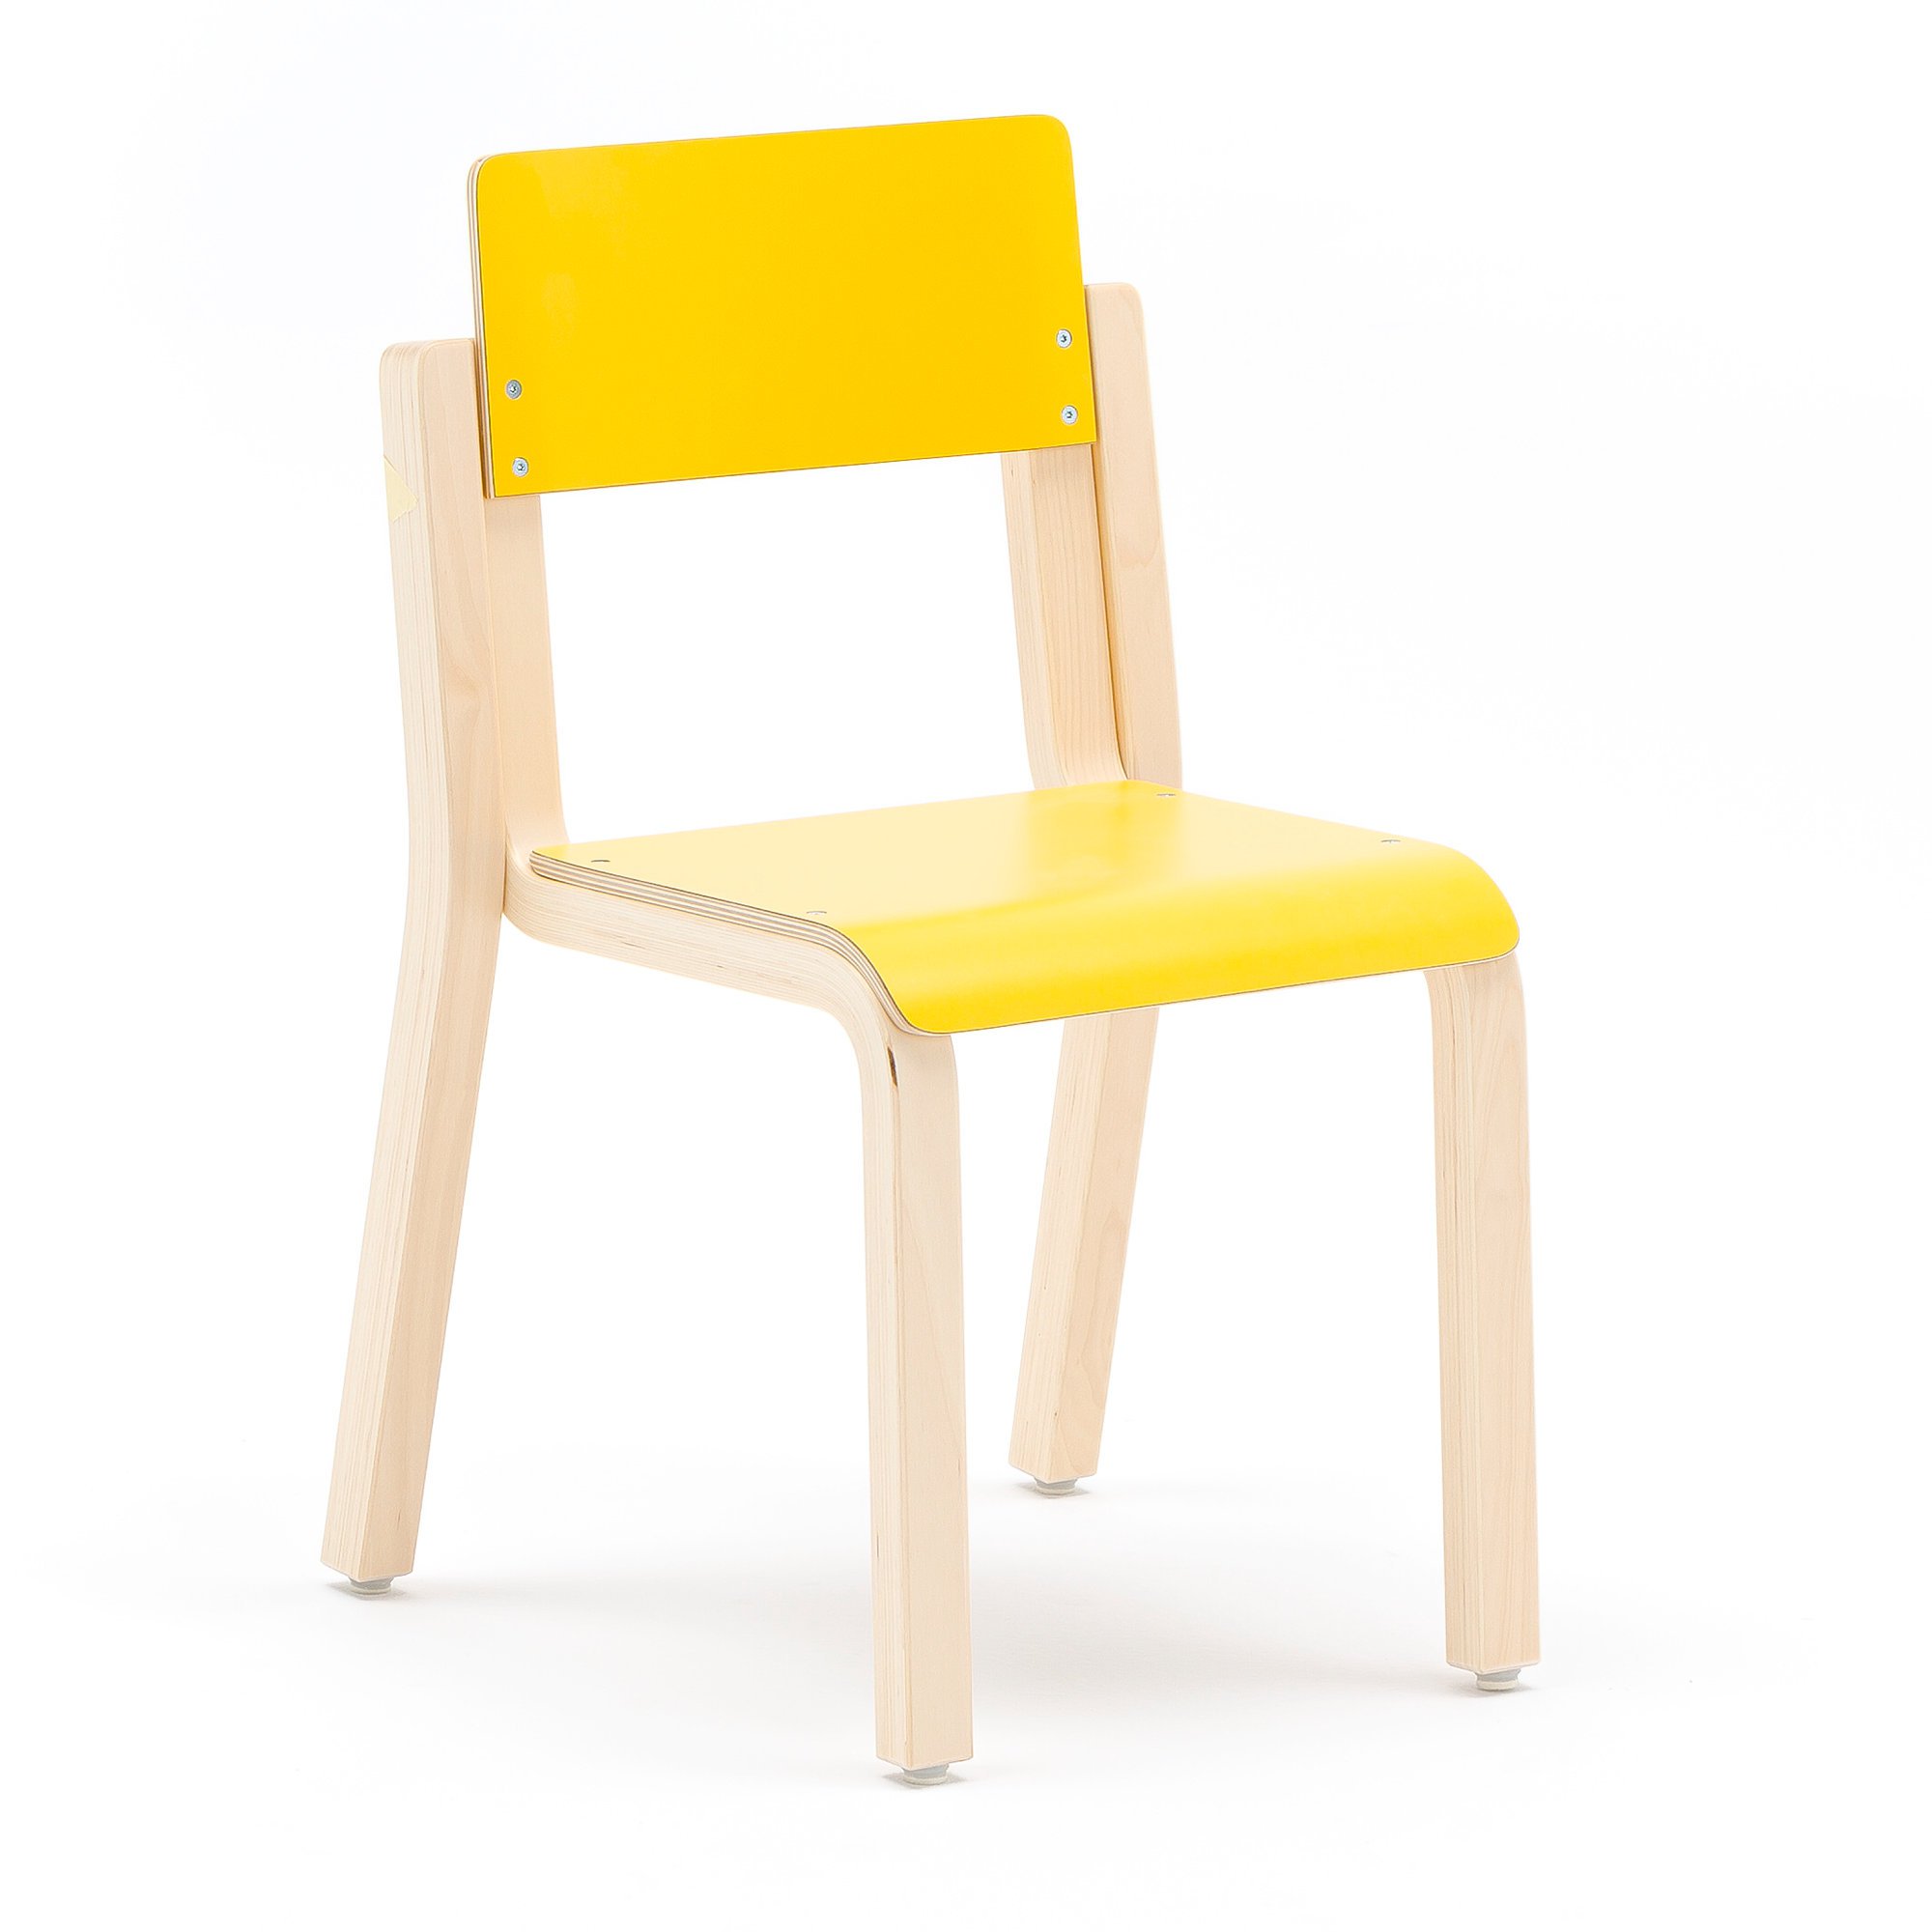 Children's chair DANTE, H 310 mm, birch, yellow laminate